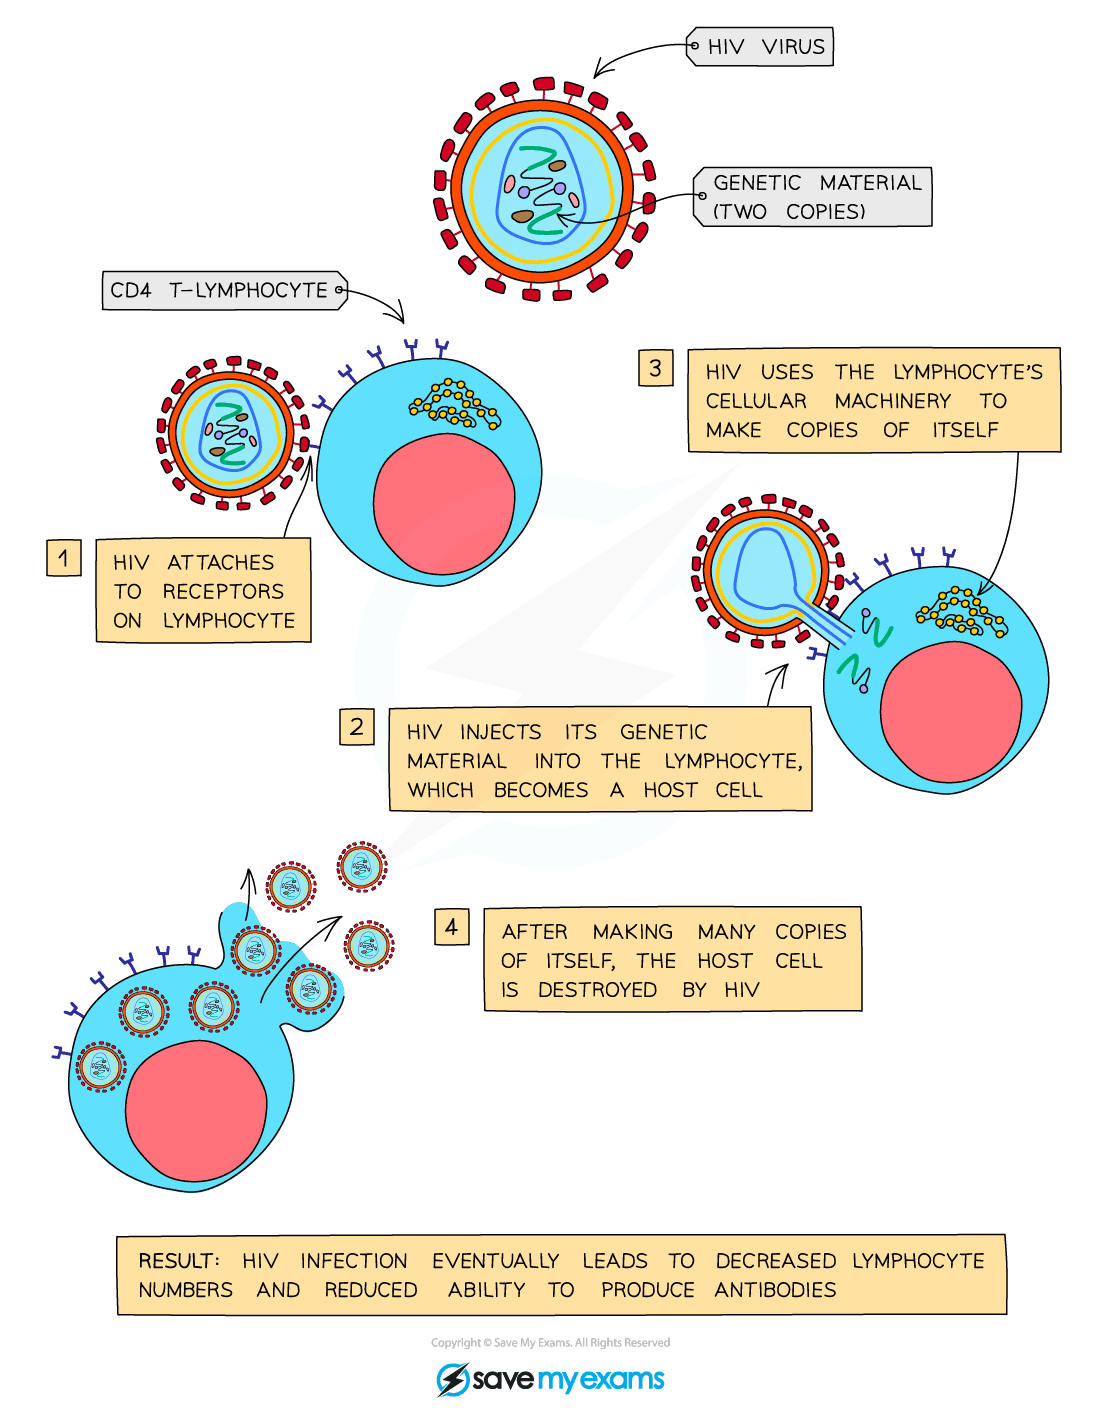 How HIV affects lymphocytes